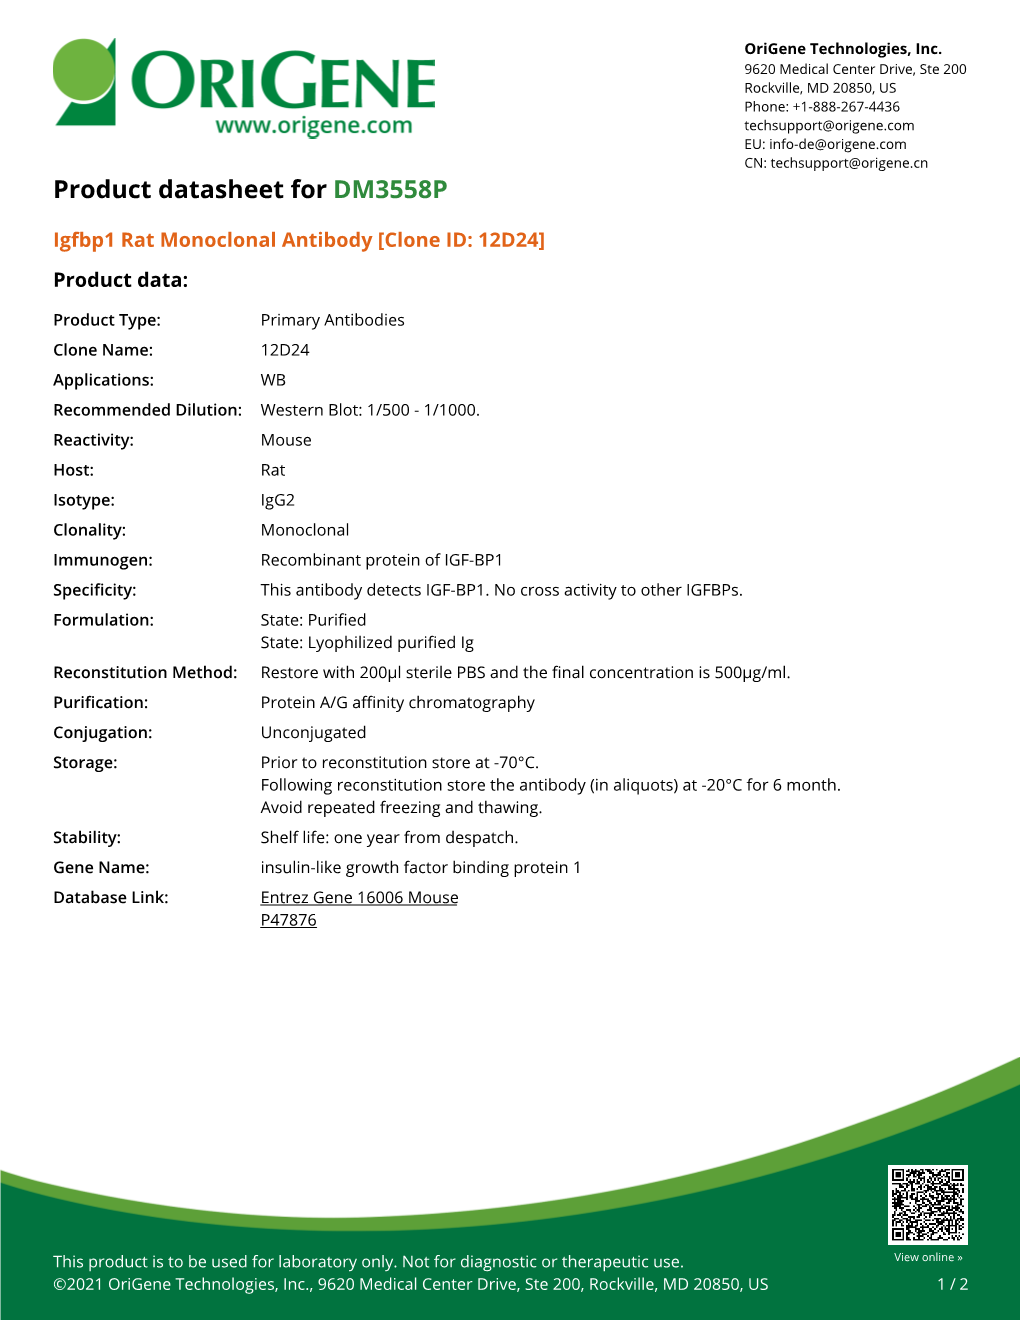 Igfbp1 Rat Monoclonal Antibody [Clone ID: 12D24] Product Data